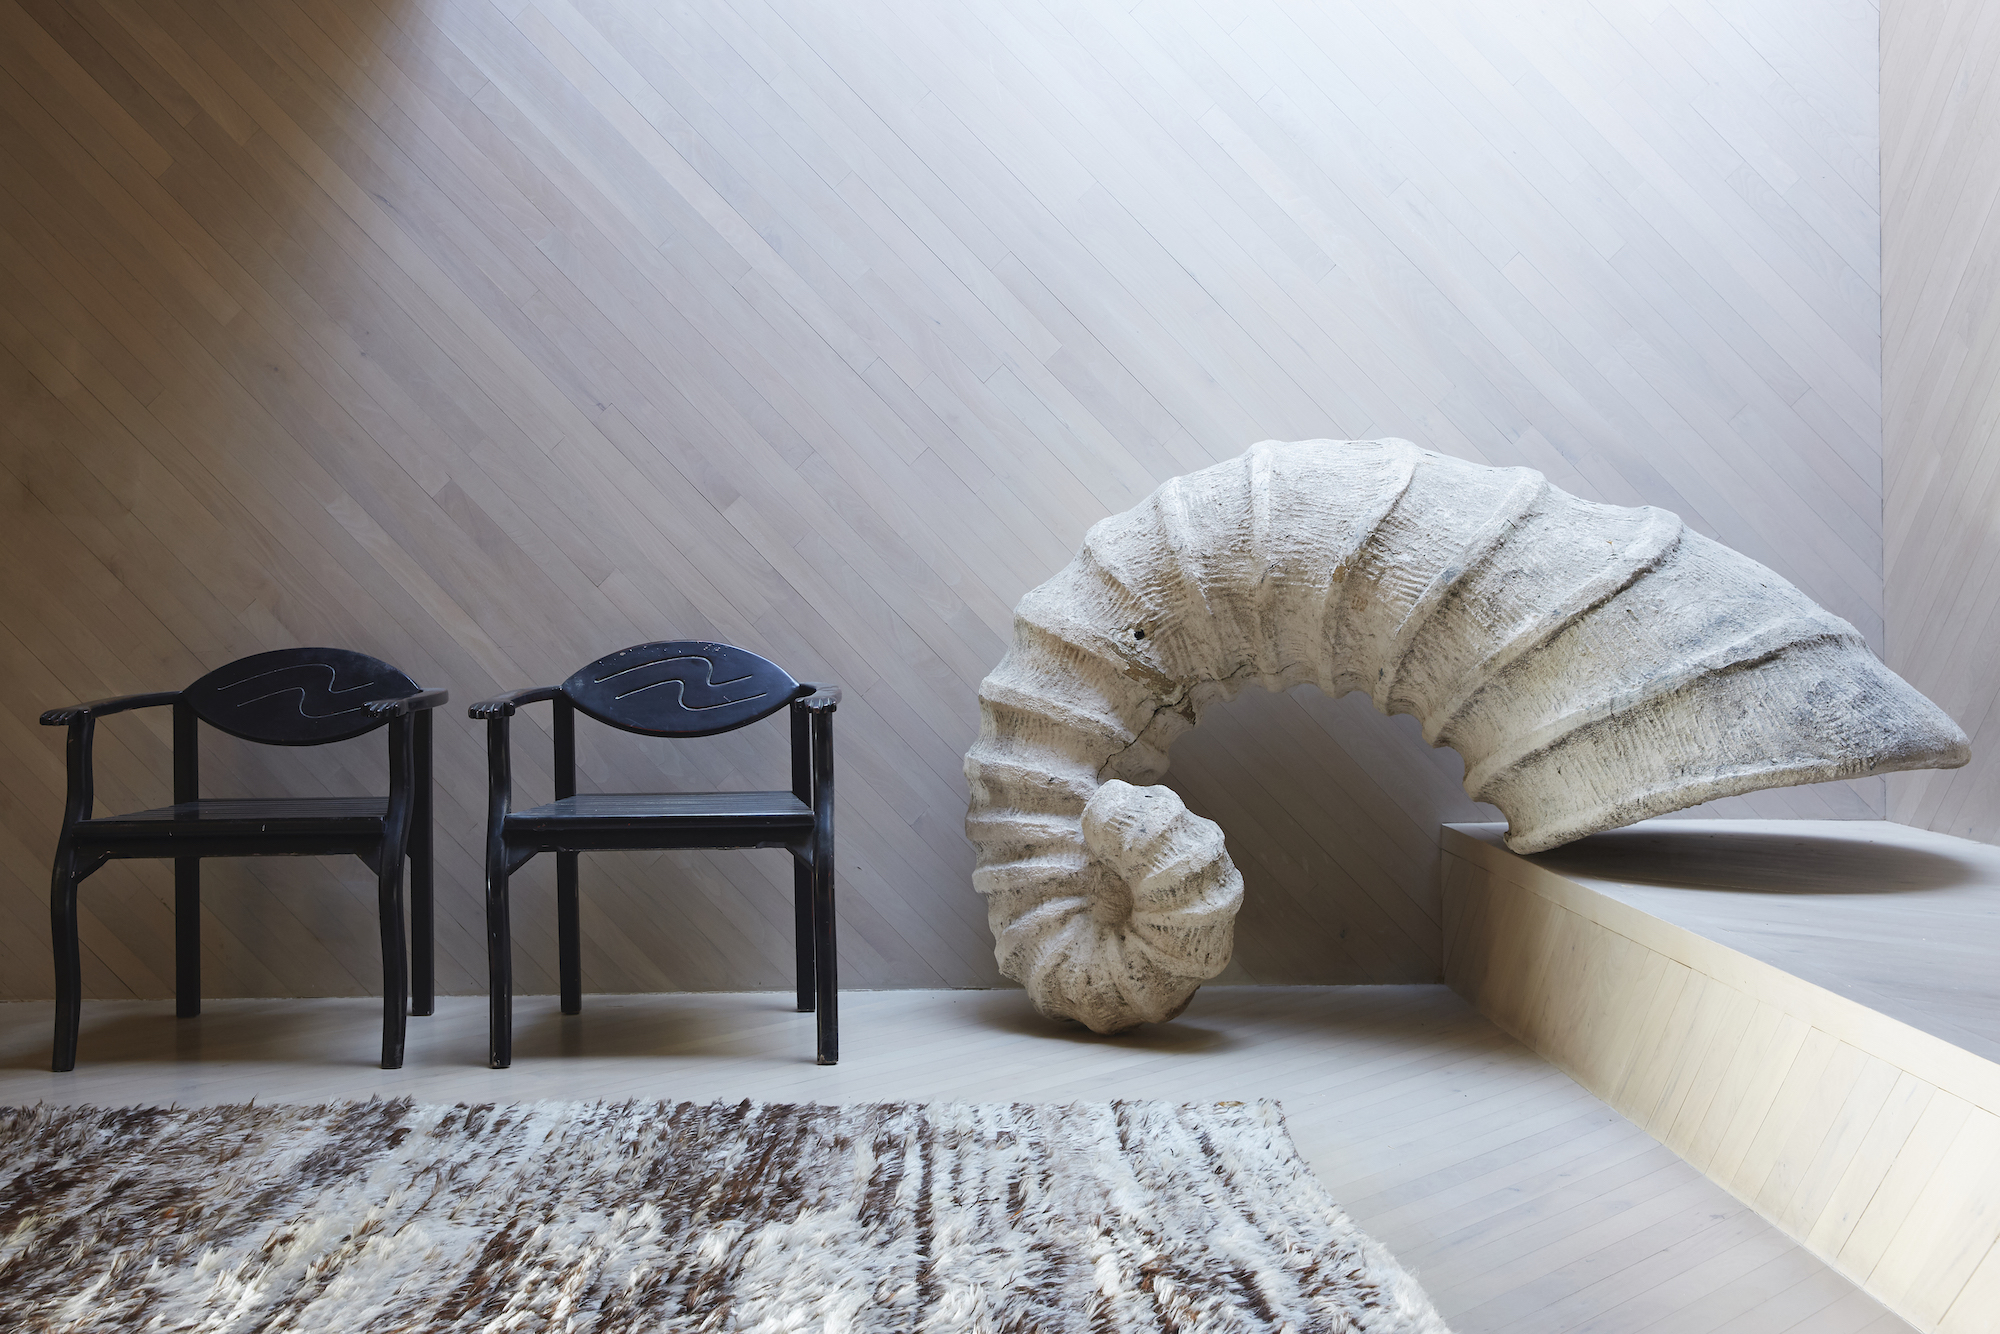 Shell sculptures in the home of interior designer Kelly Wearstler in Effect Magazine